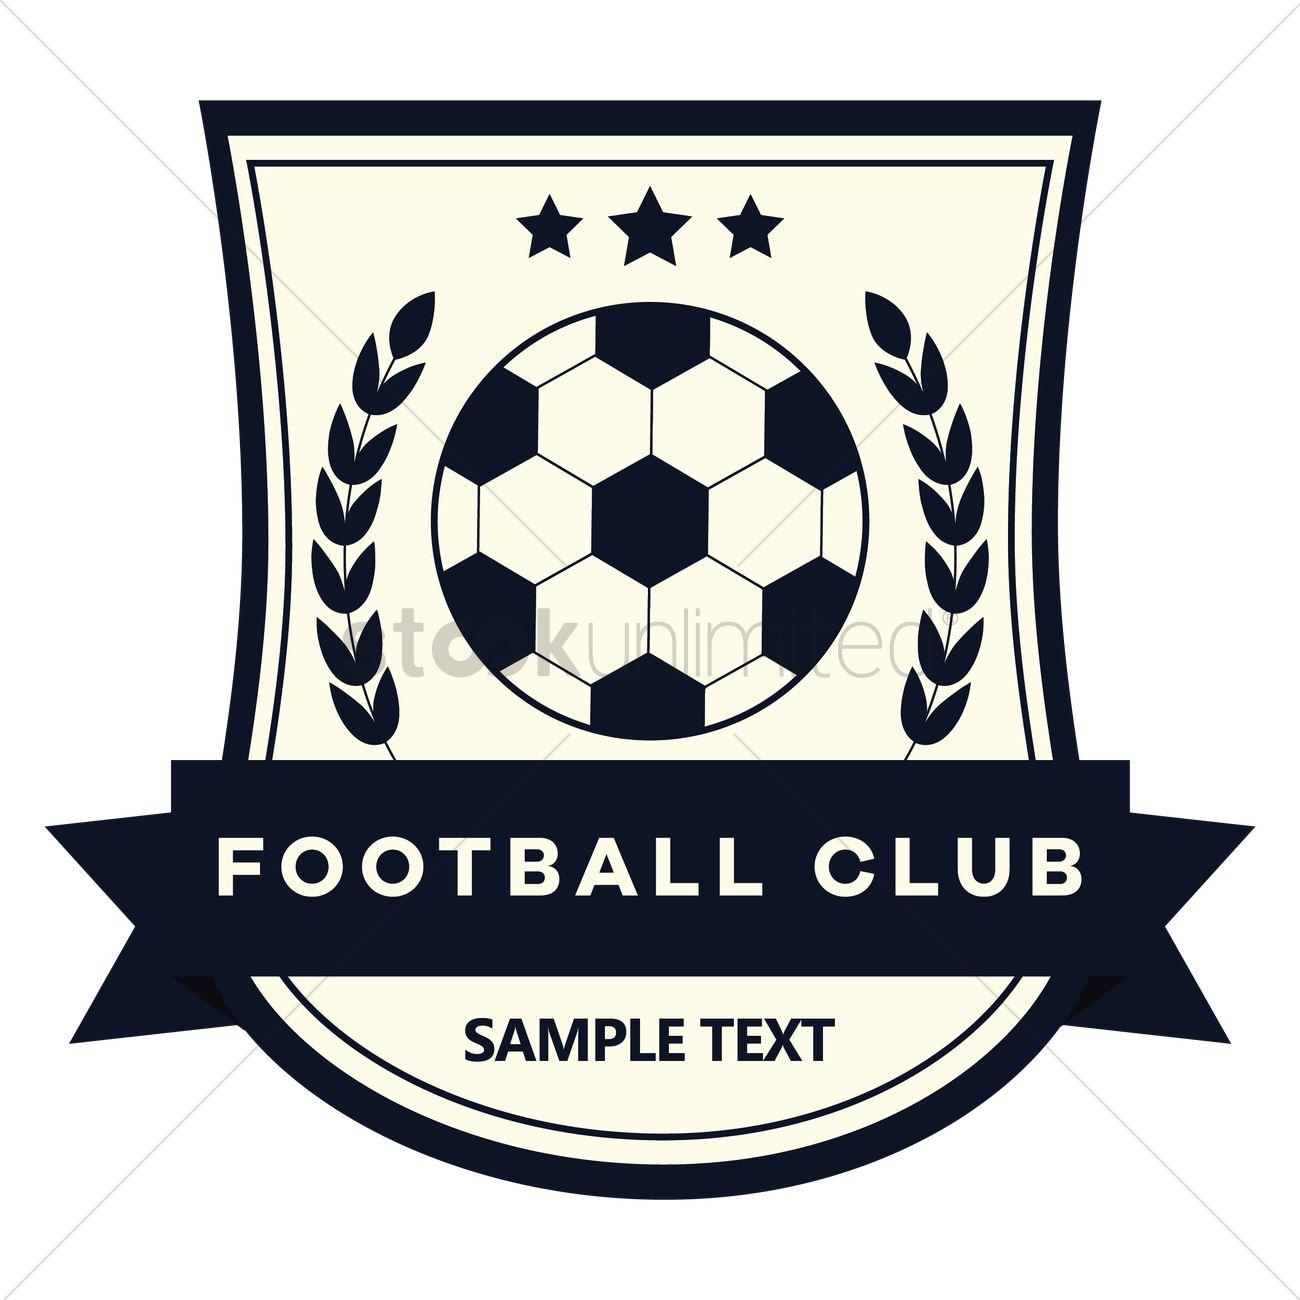 Black Football Logo - Football club logo Vector Image - 1527032 | StockUnlimited